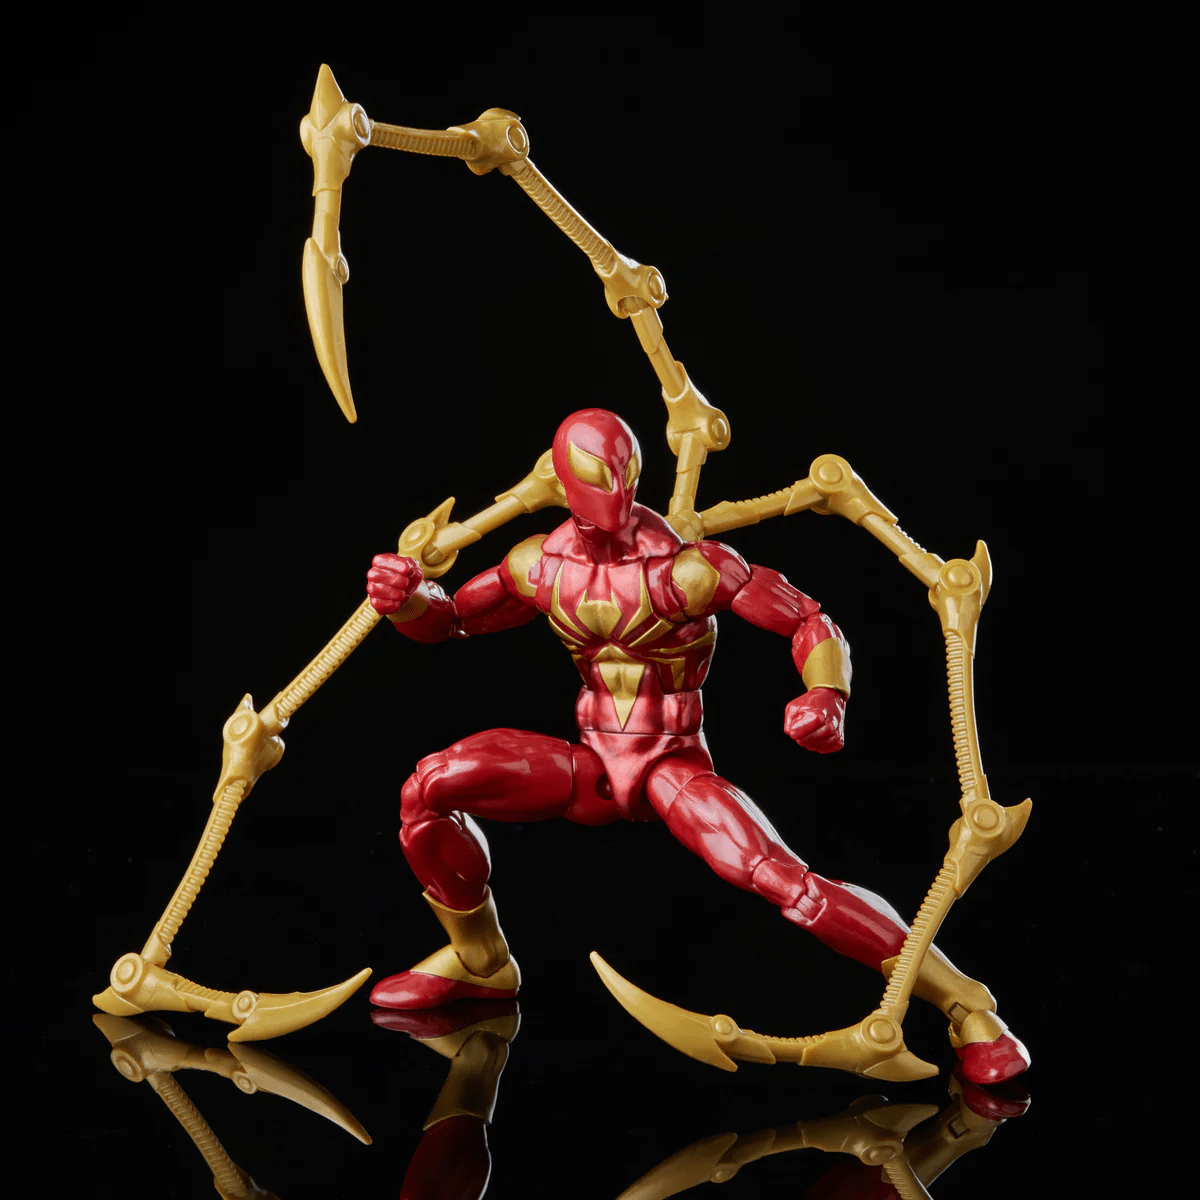 Hasbro Marvel Legends Series Spider-Man Iron Spider Action Figure